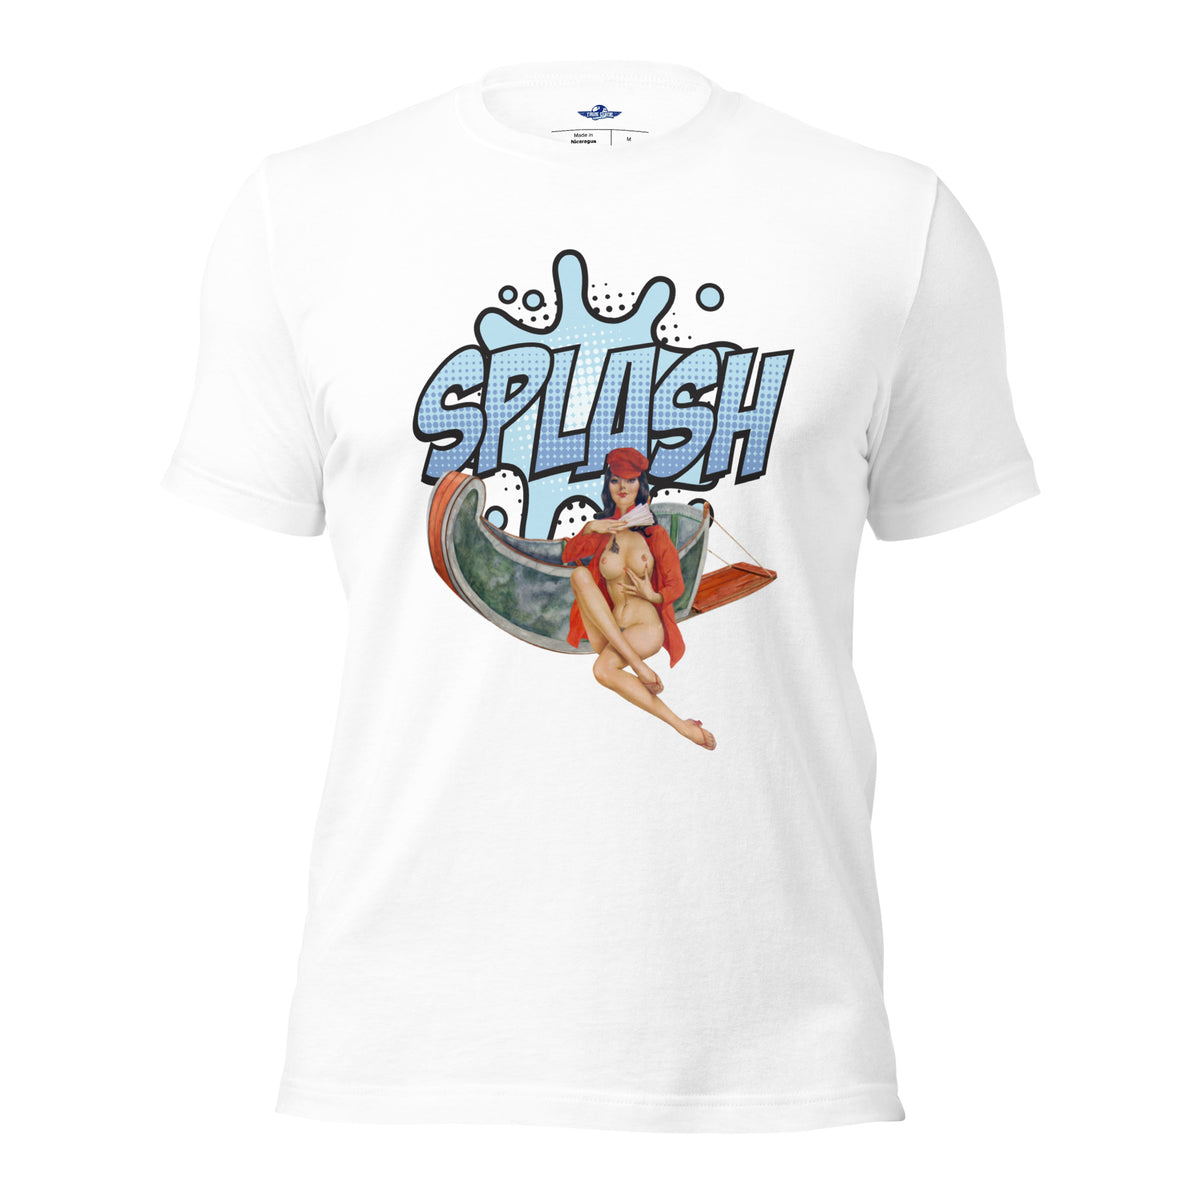 She Made A Splash T-Shirt